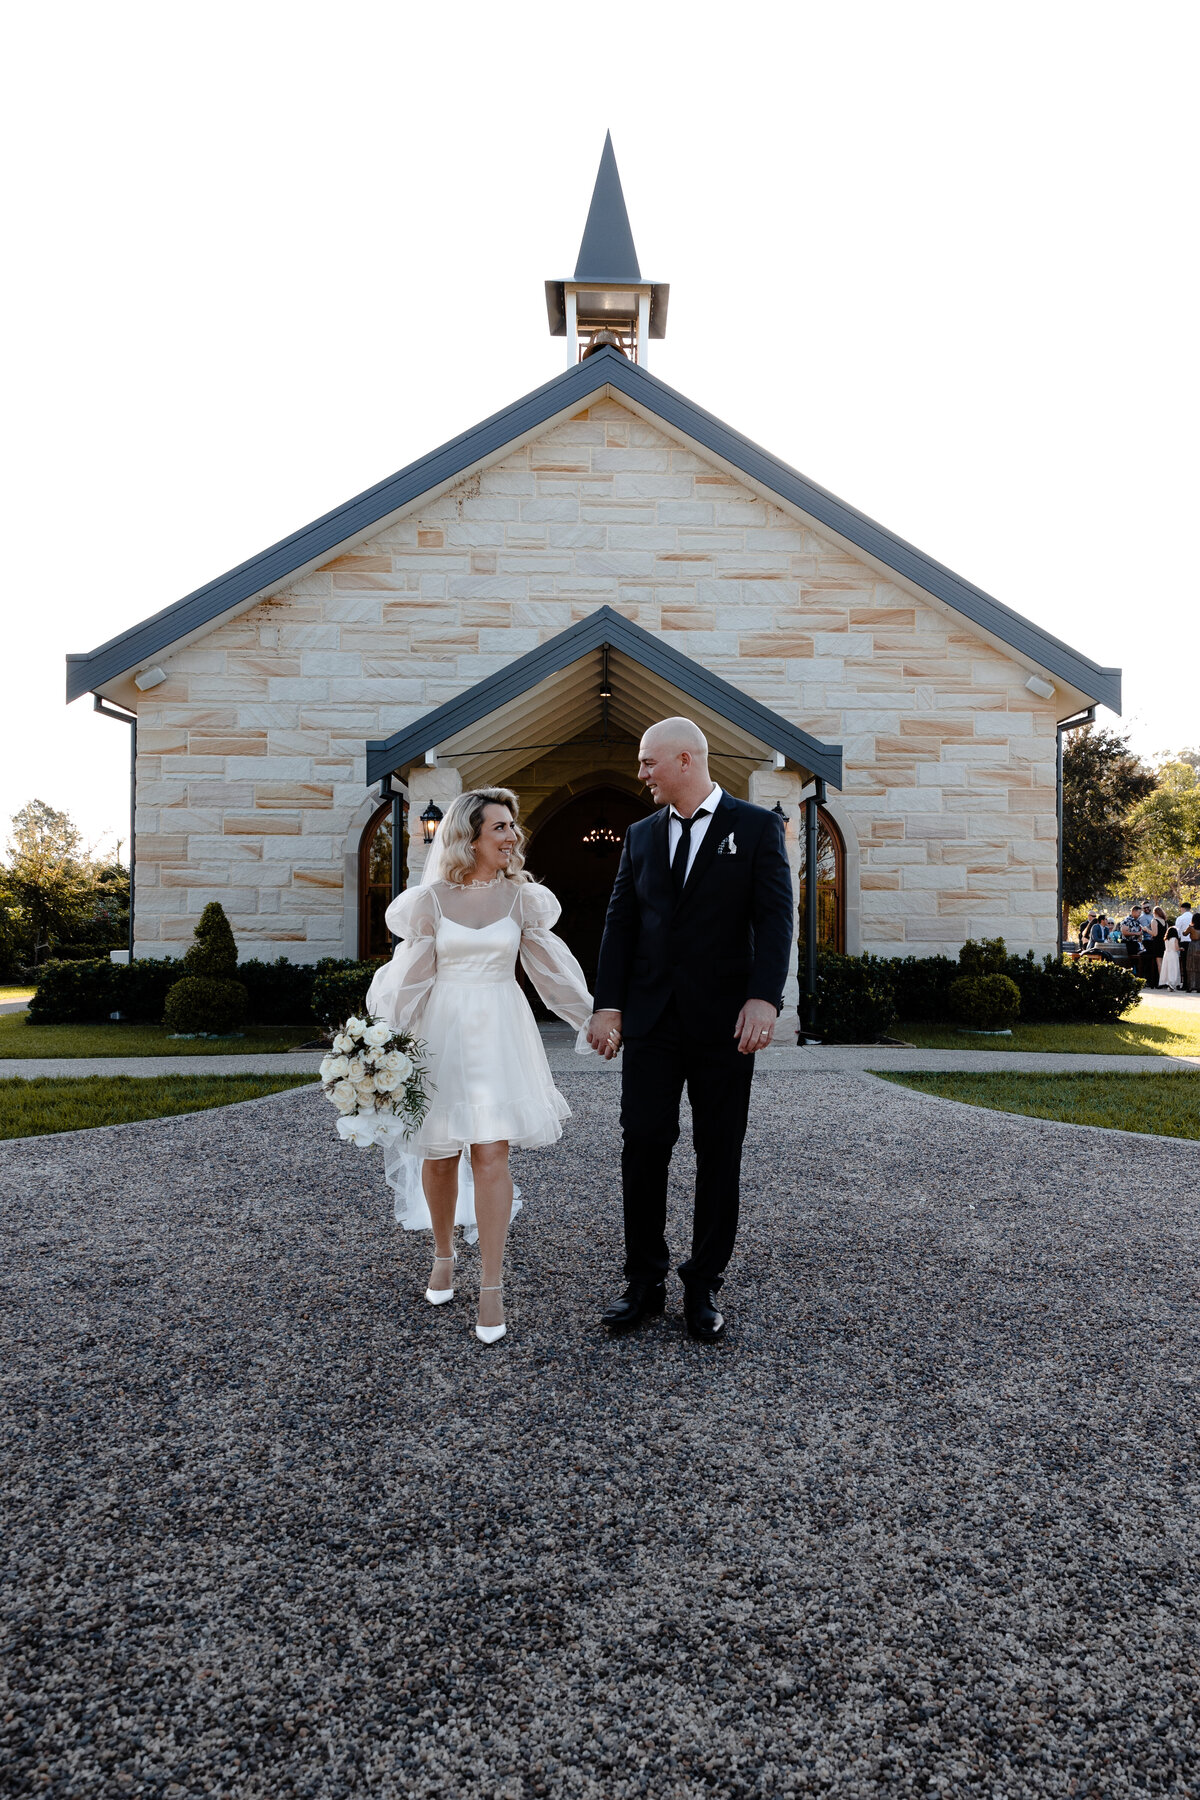 Katie & Trent Wedding - Peterson House Pokolbin - Roam Ahead Media 2022 - Wedding videography and photography-613